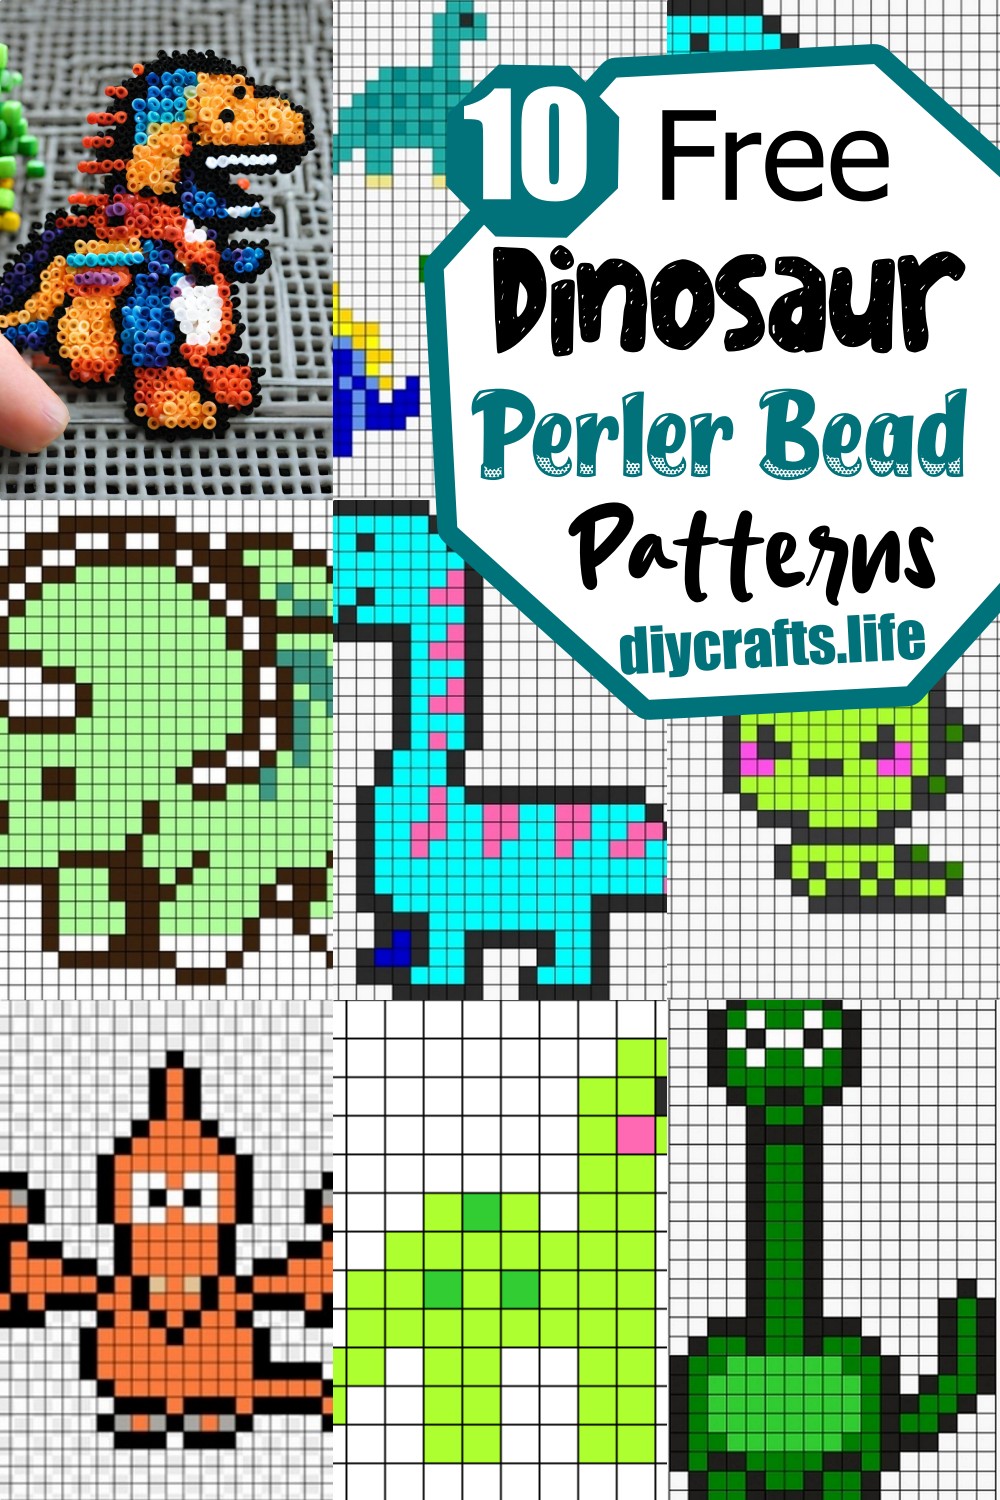 10 Dinosaur Perler Beads Patterns For Prehistoric Fun - DIY Crafts